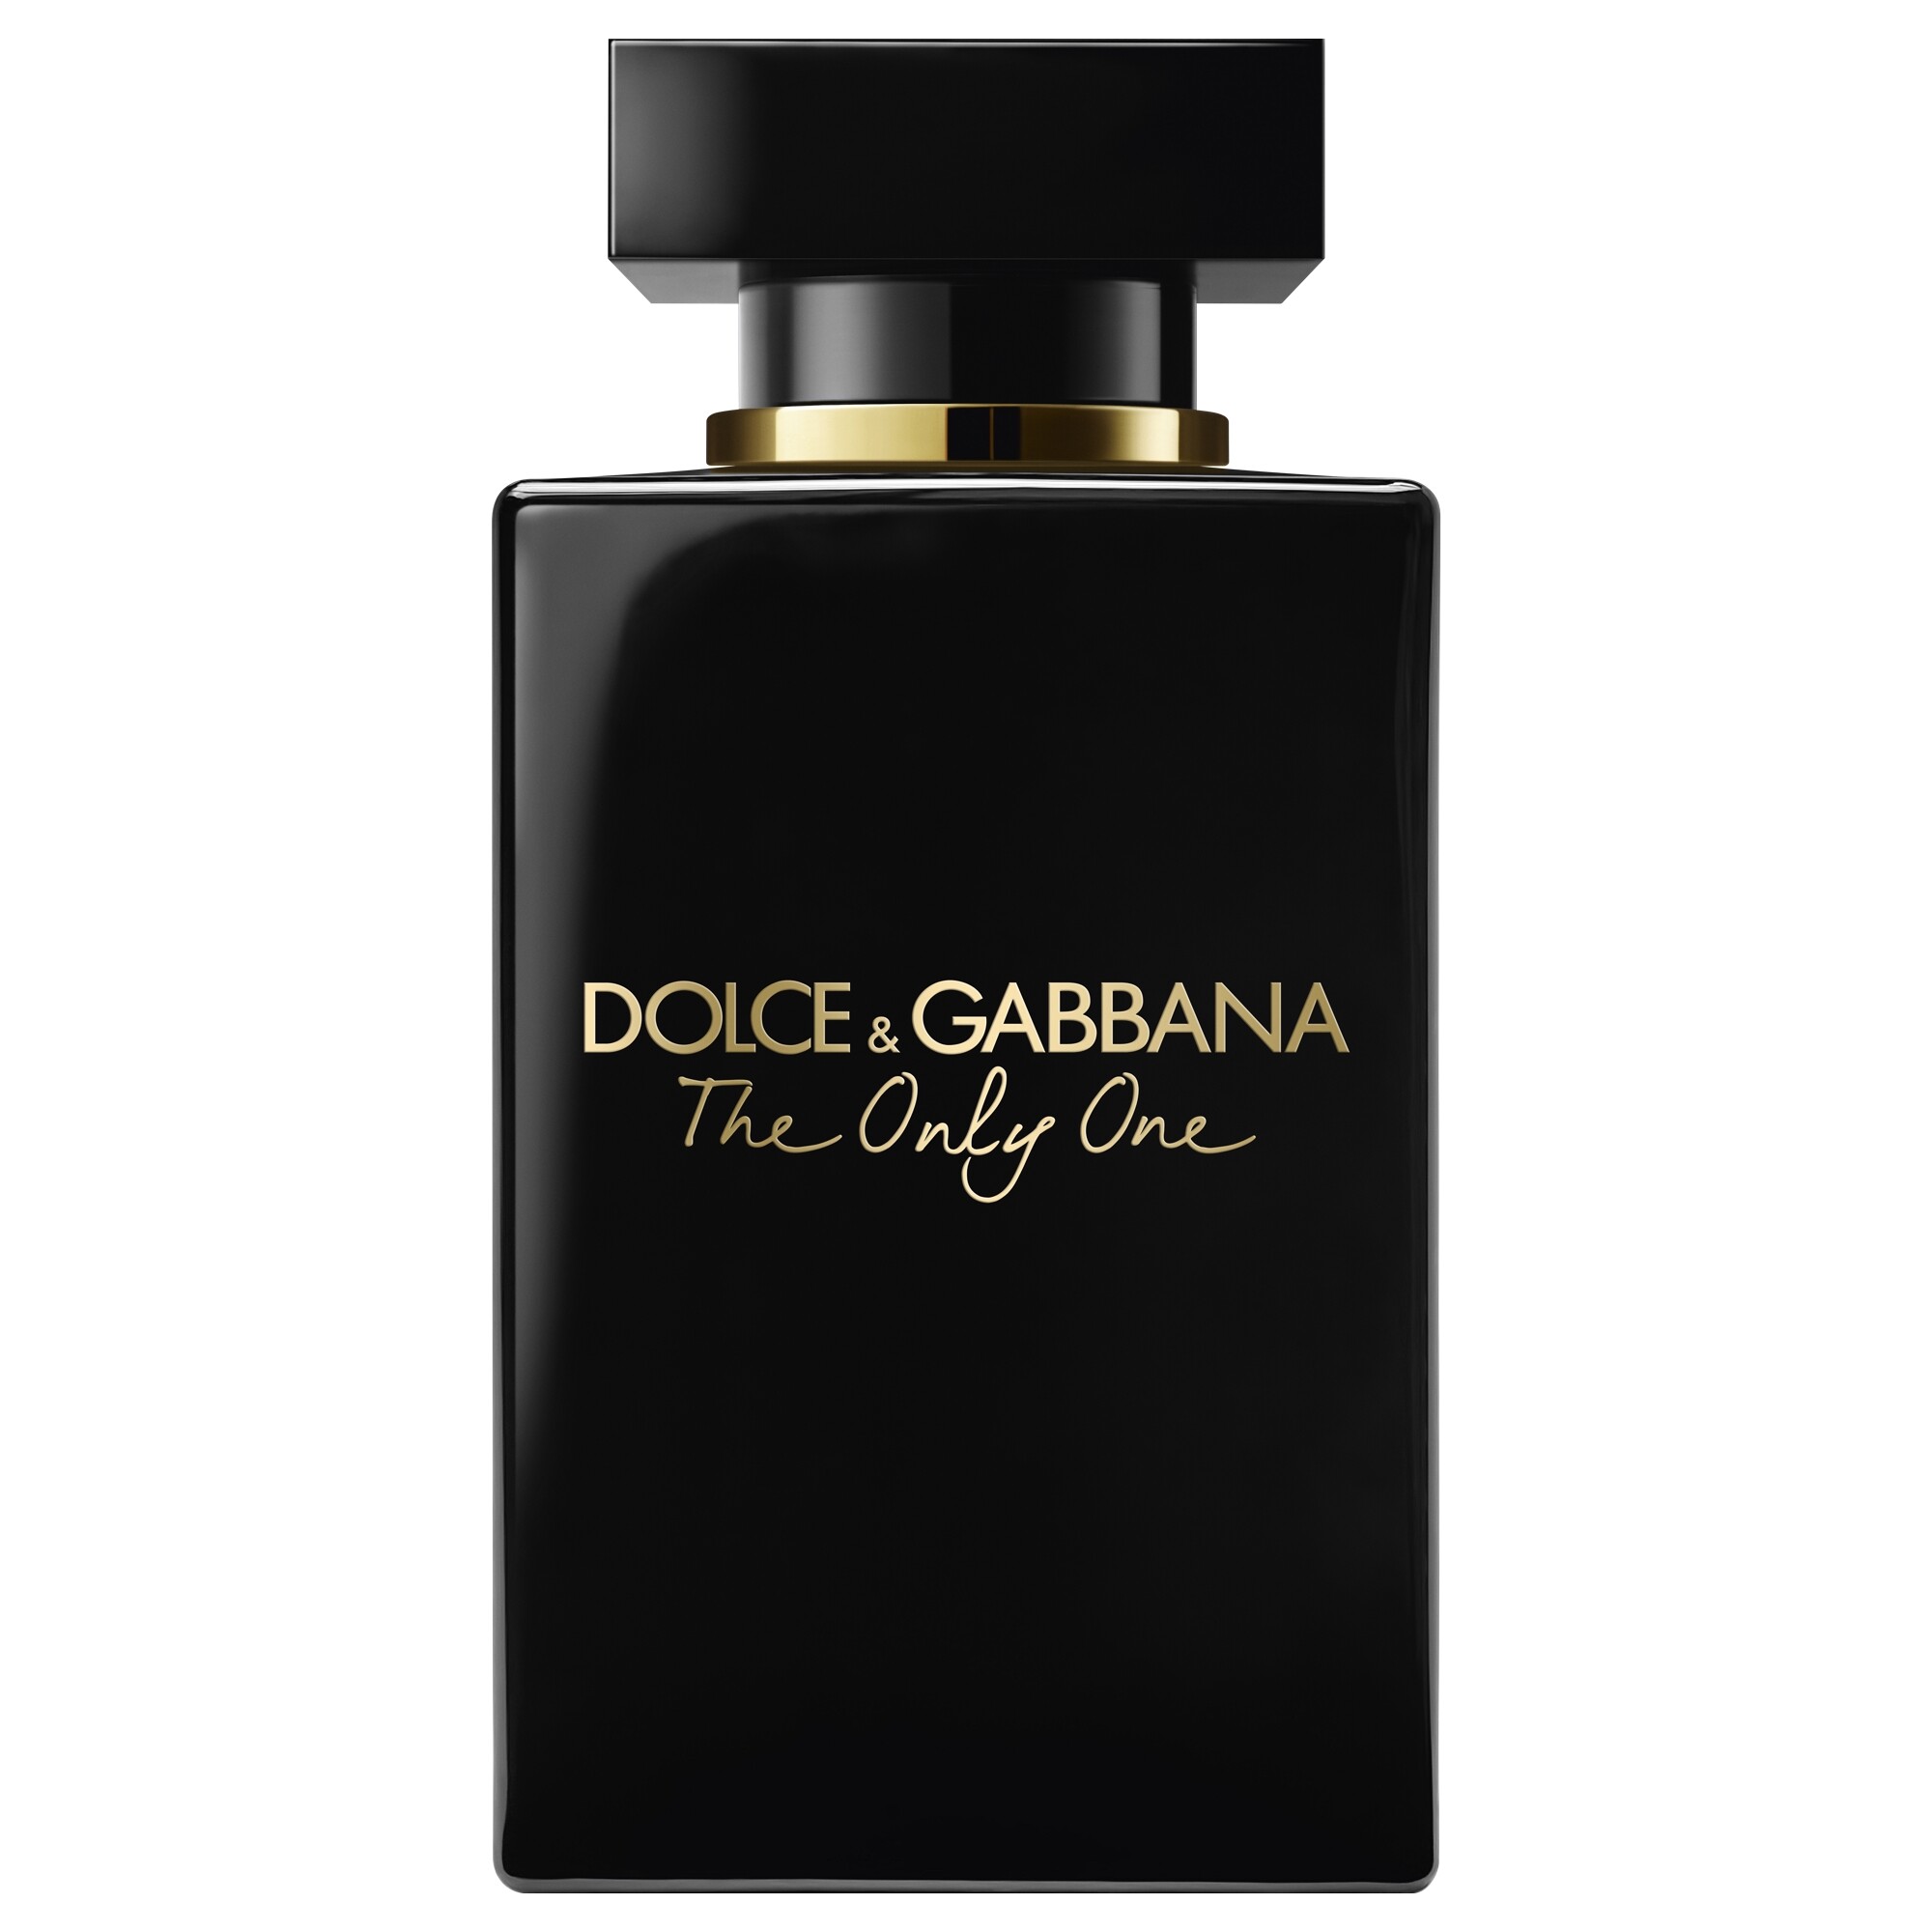 The Only One Dolce und Gabbana The Only One kaufen